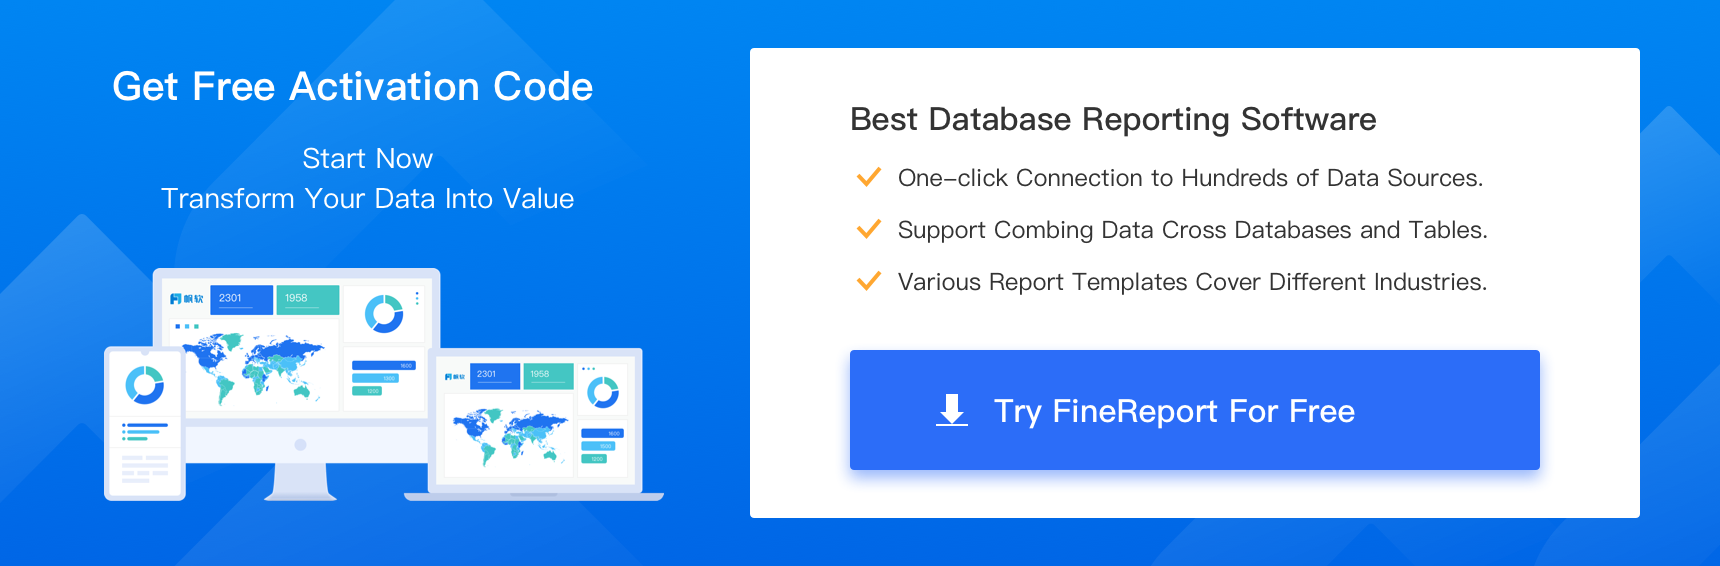 best database software cloud report